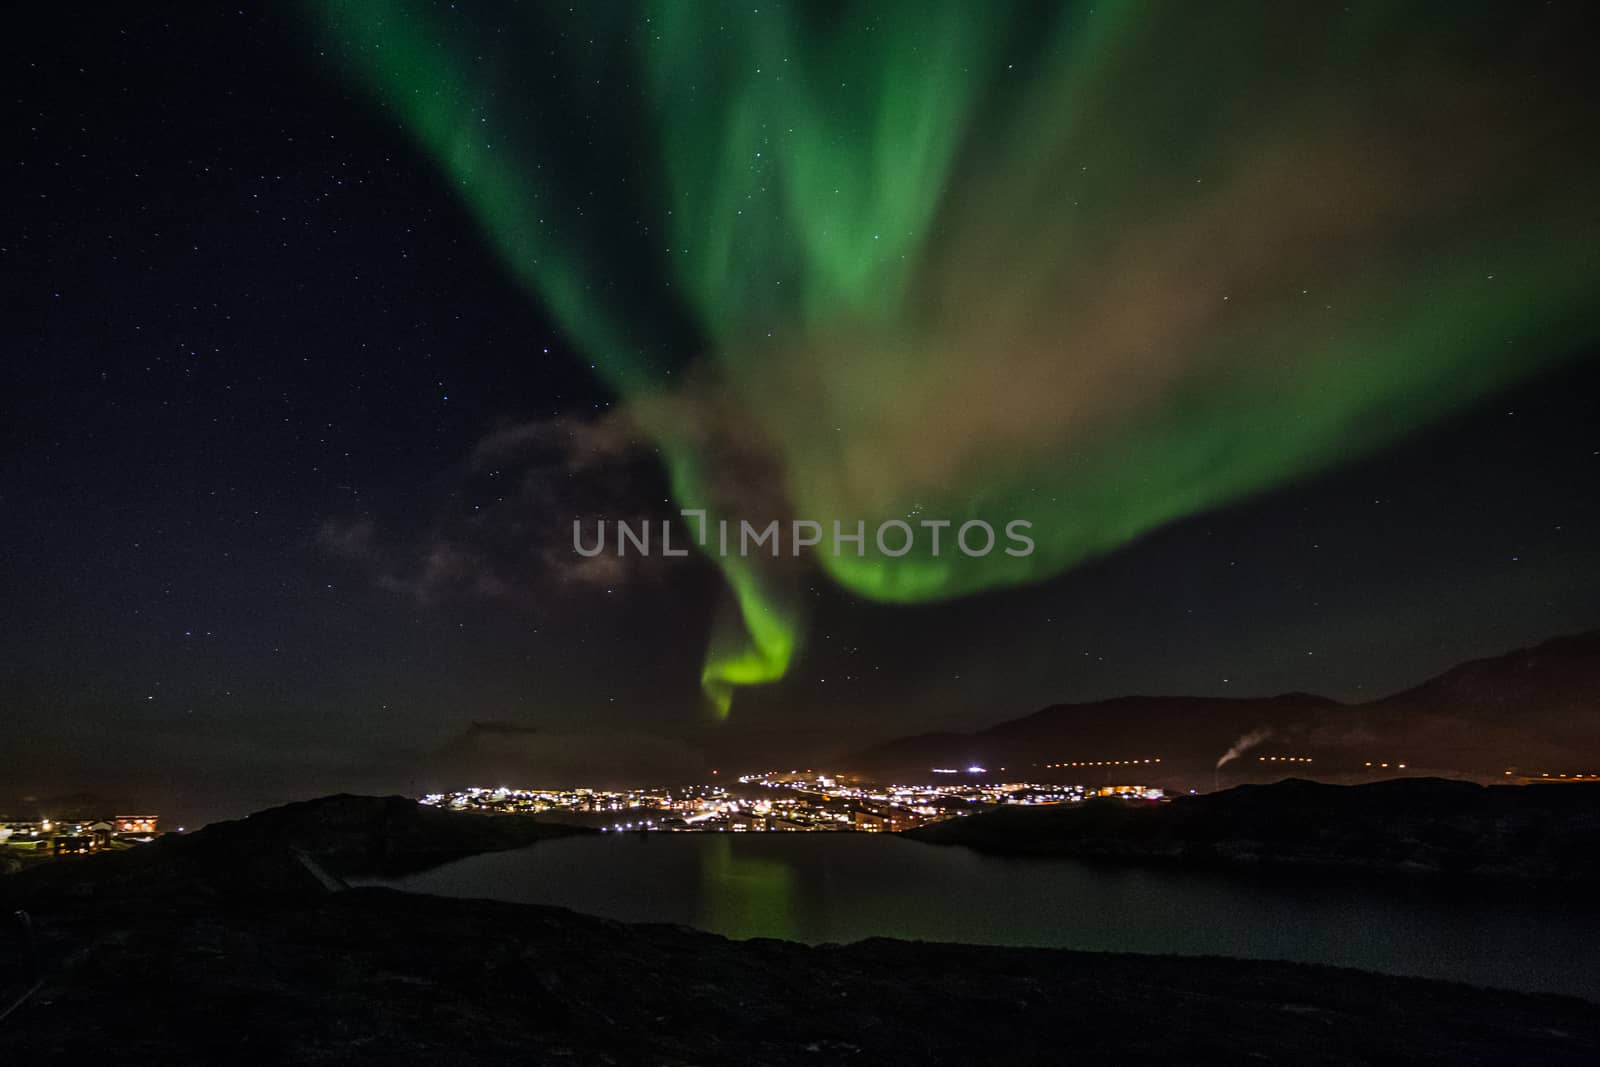 Massive green Aurora Borealis Northern lights shining over the lake and Nuuk city, Greenland